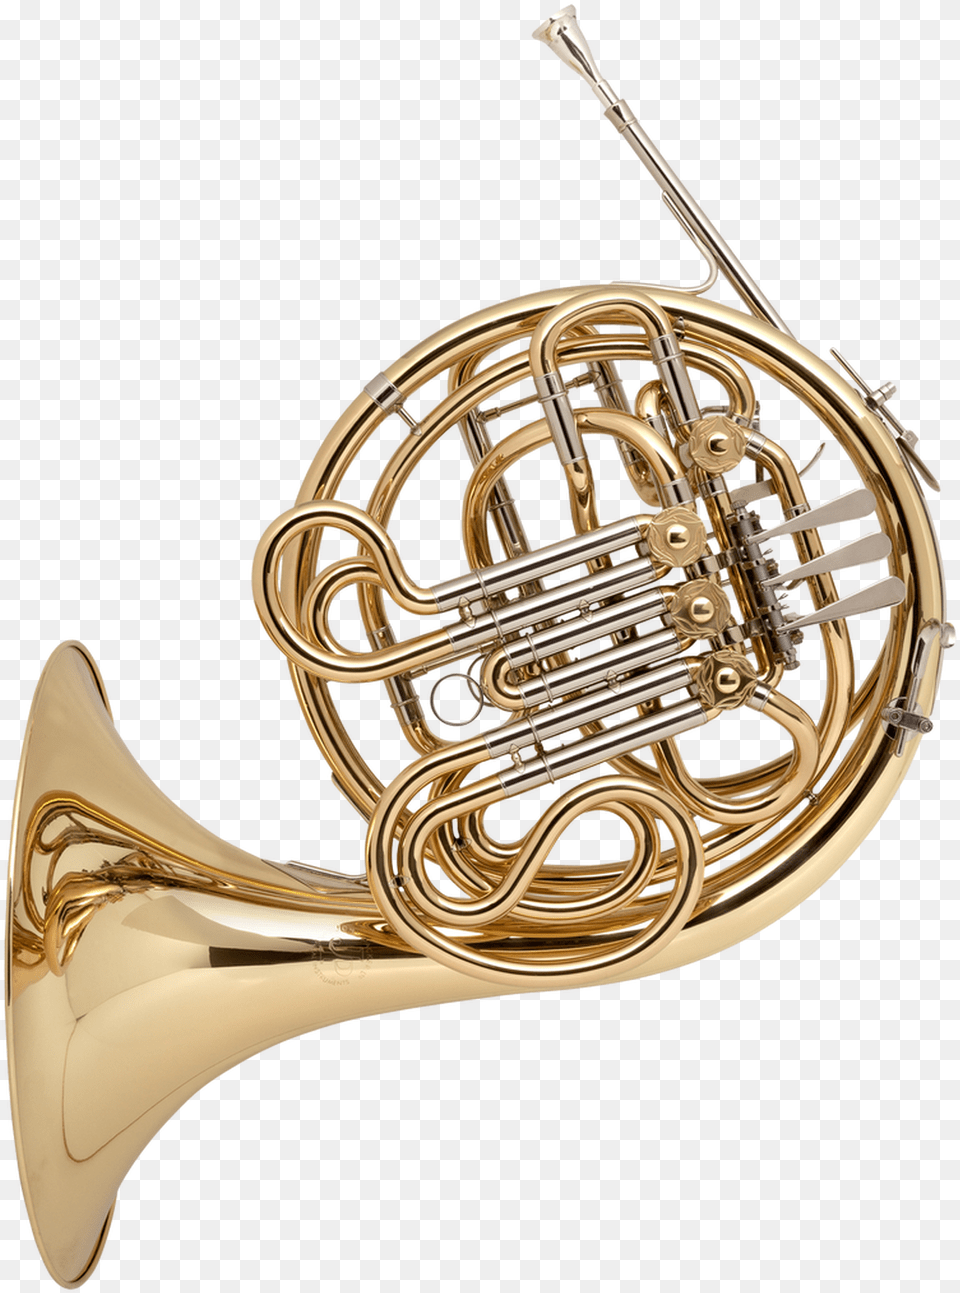 John Packer Jp164 Double Bbf French Horn John Packer French Horn, Brass Section, Musical Instrument, French Horn, Car Png